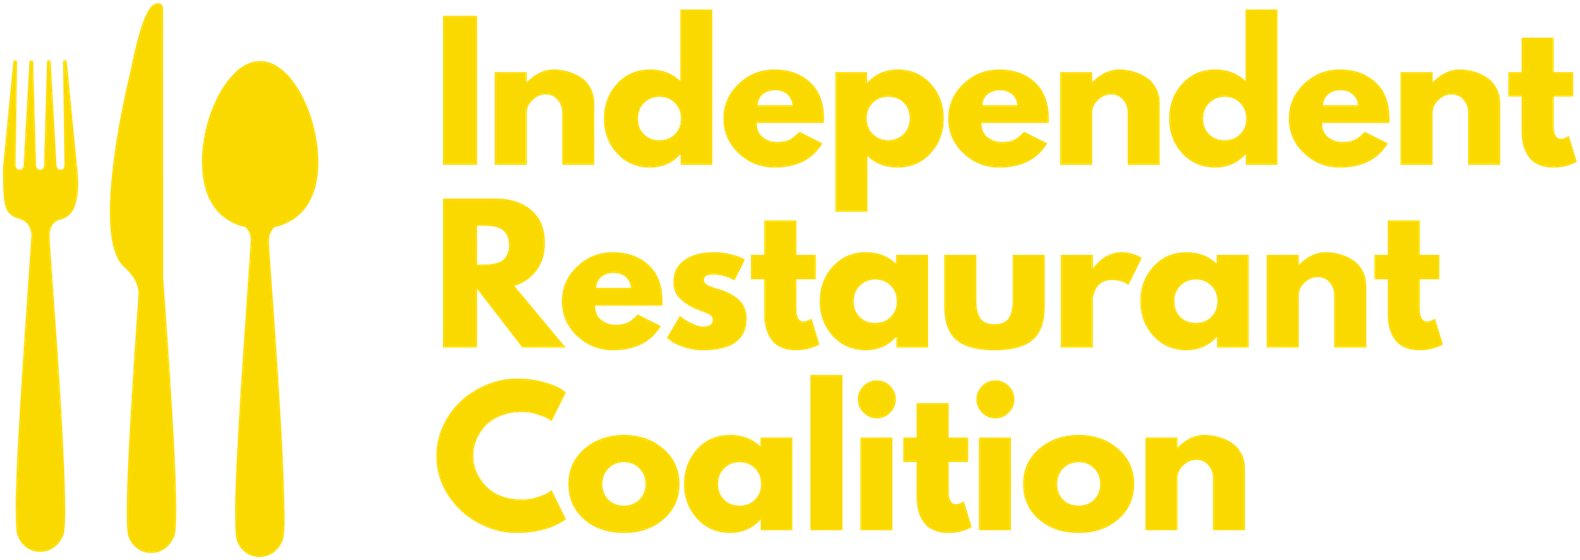 Independent Restaurant Coalition